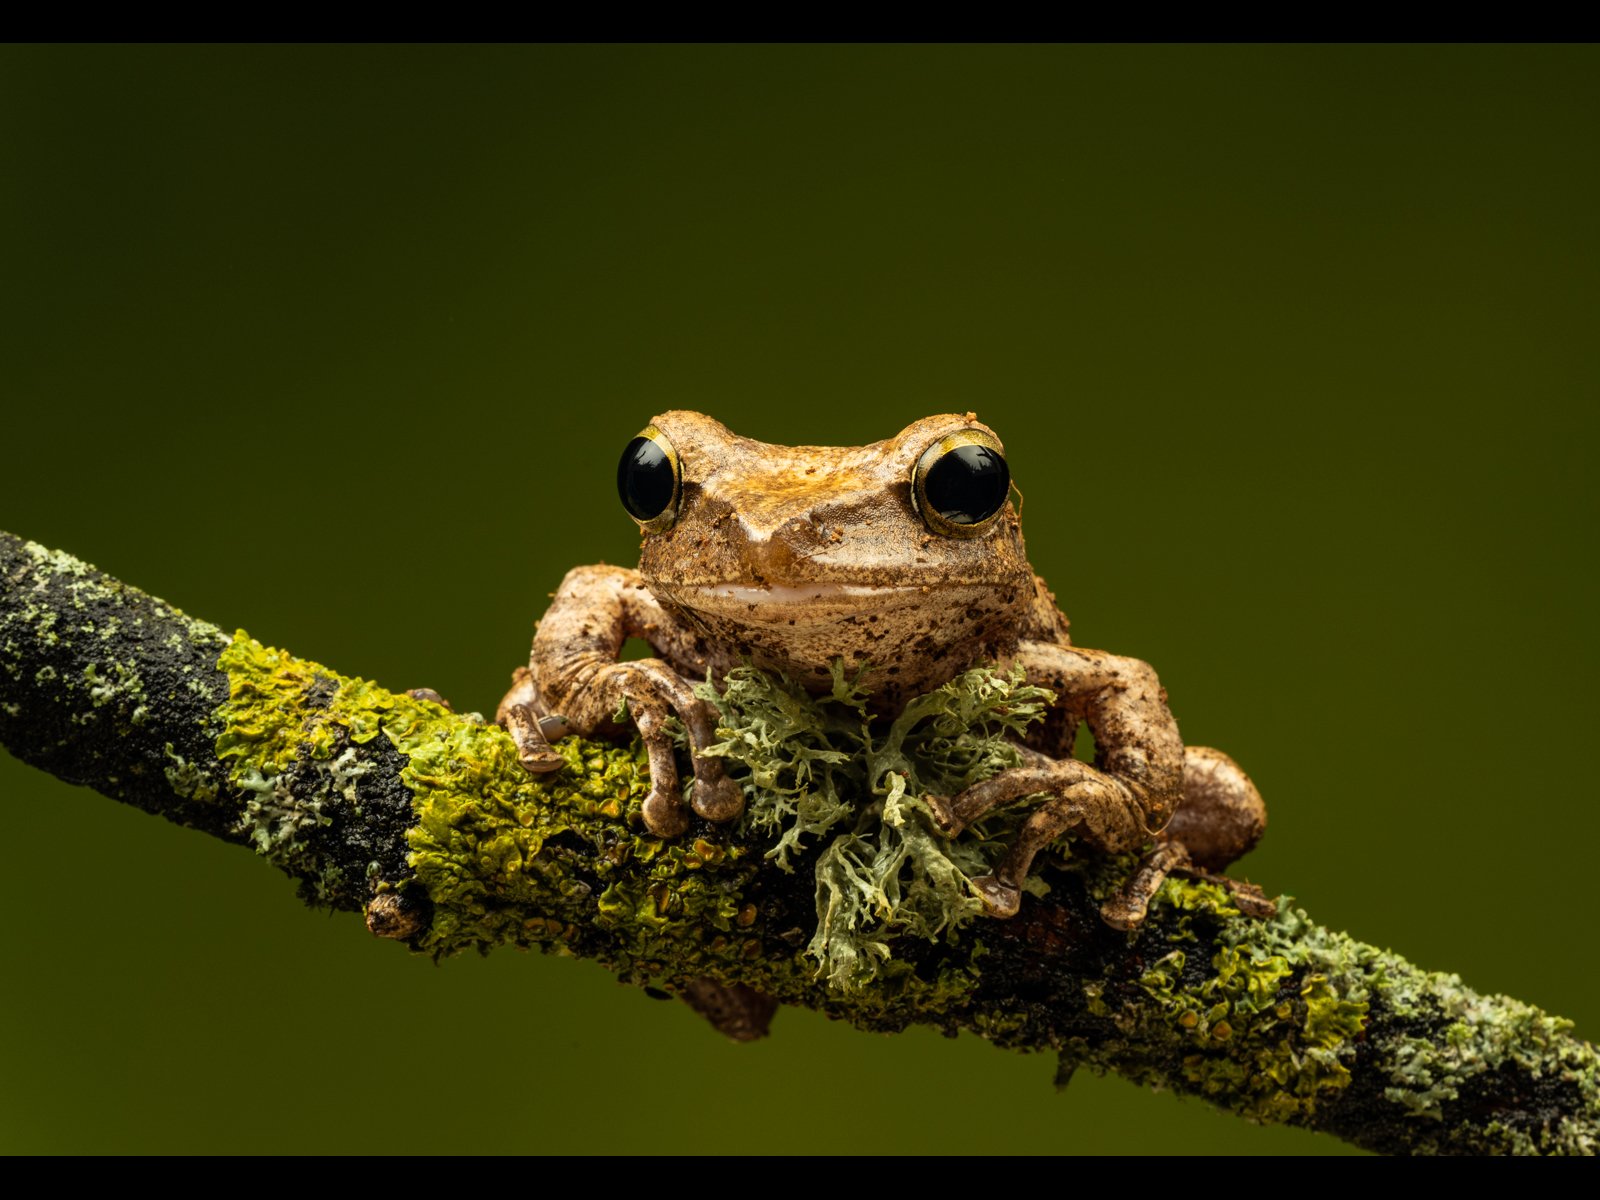 3. Tree Frog